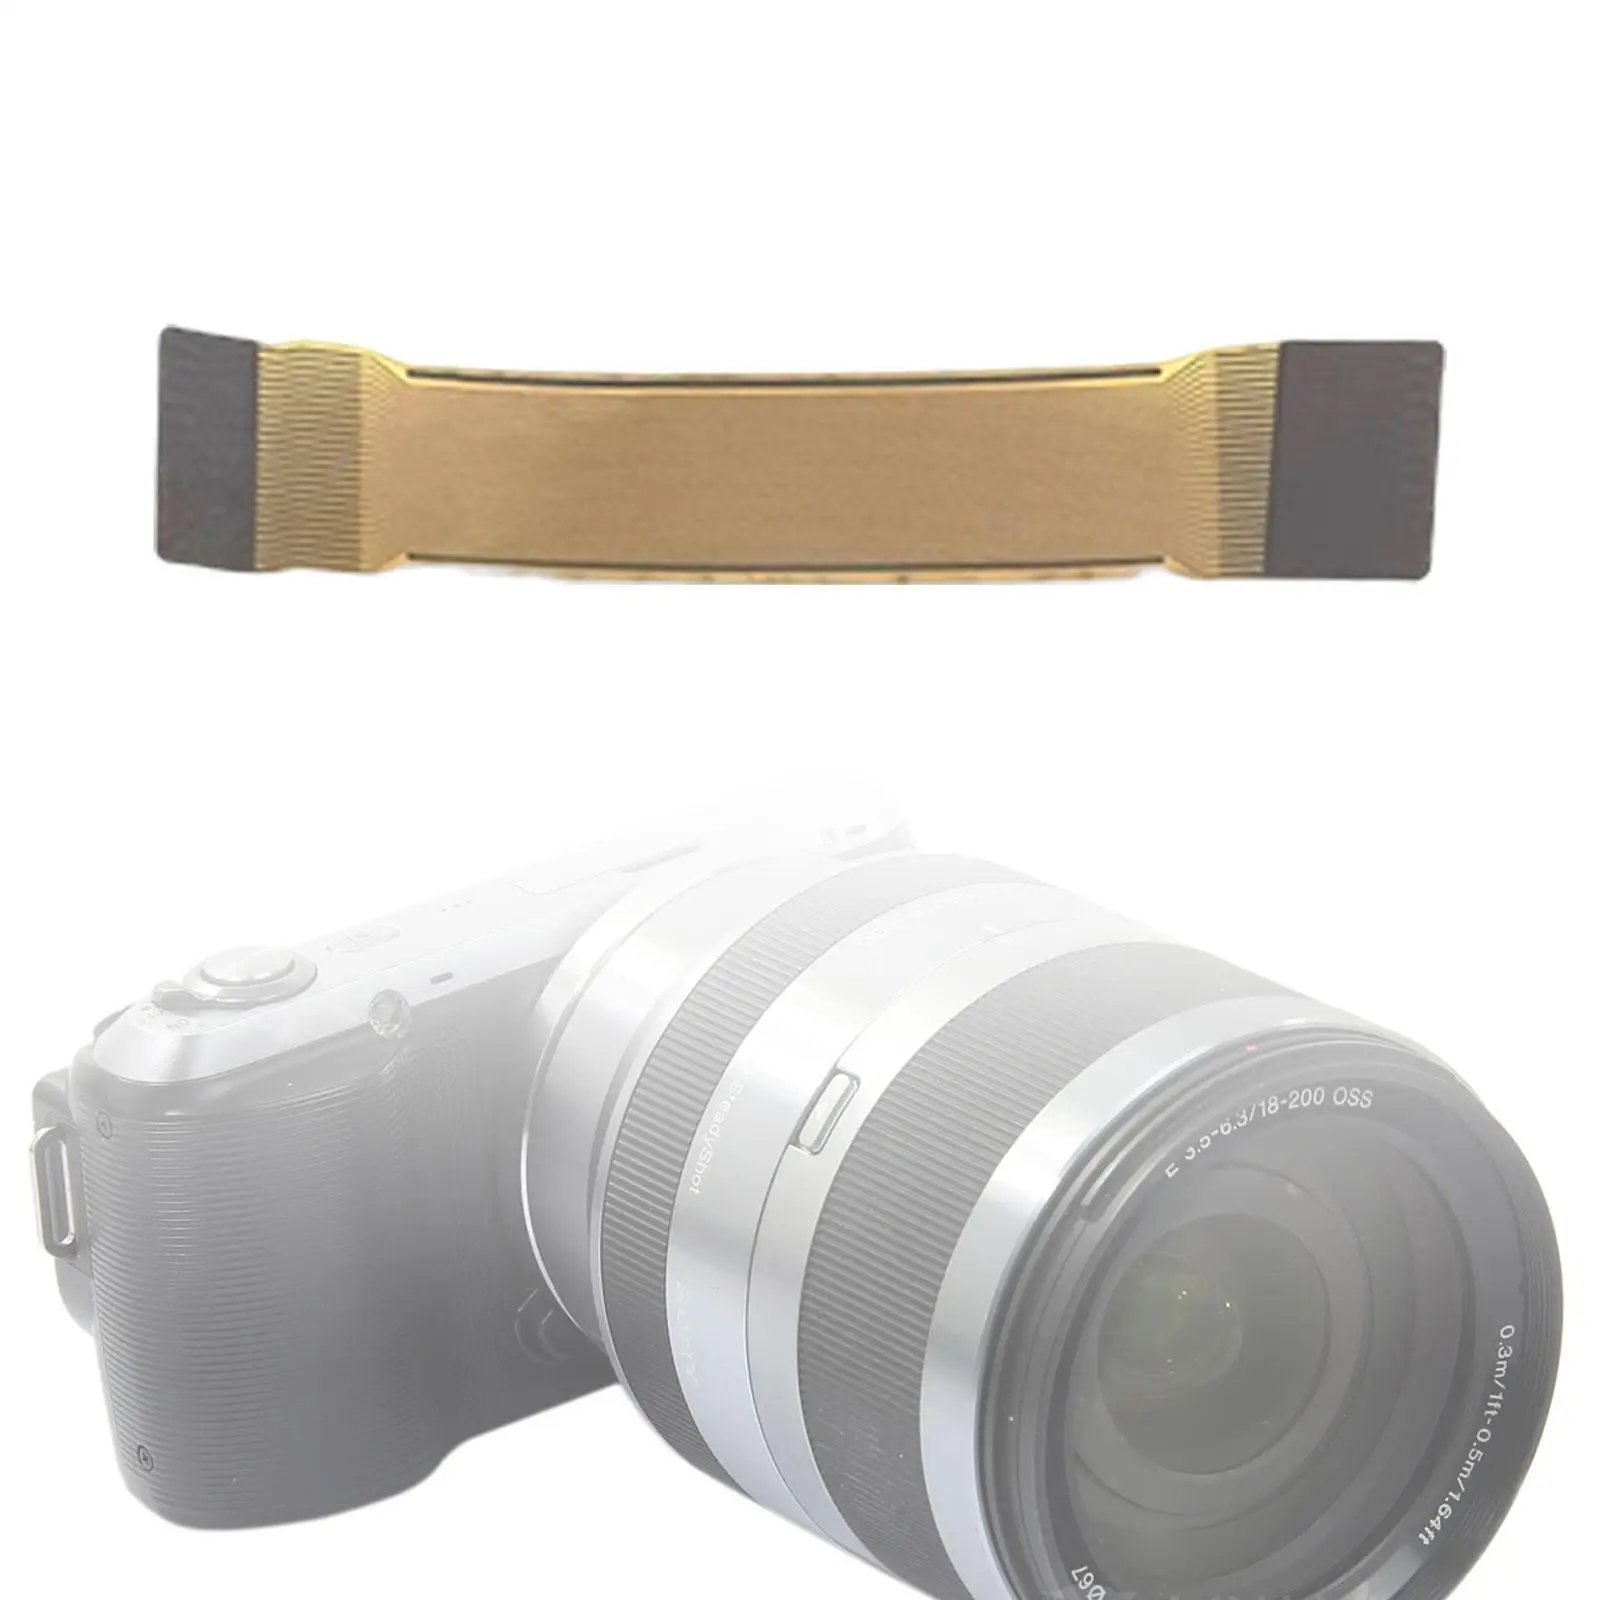 Digital Camera Lens Flex Cable, Replace Parts Professional Fpc Lens Line for 18-200mm Accessory